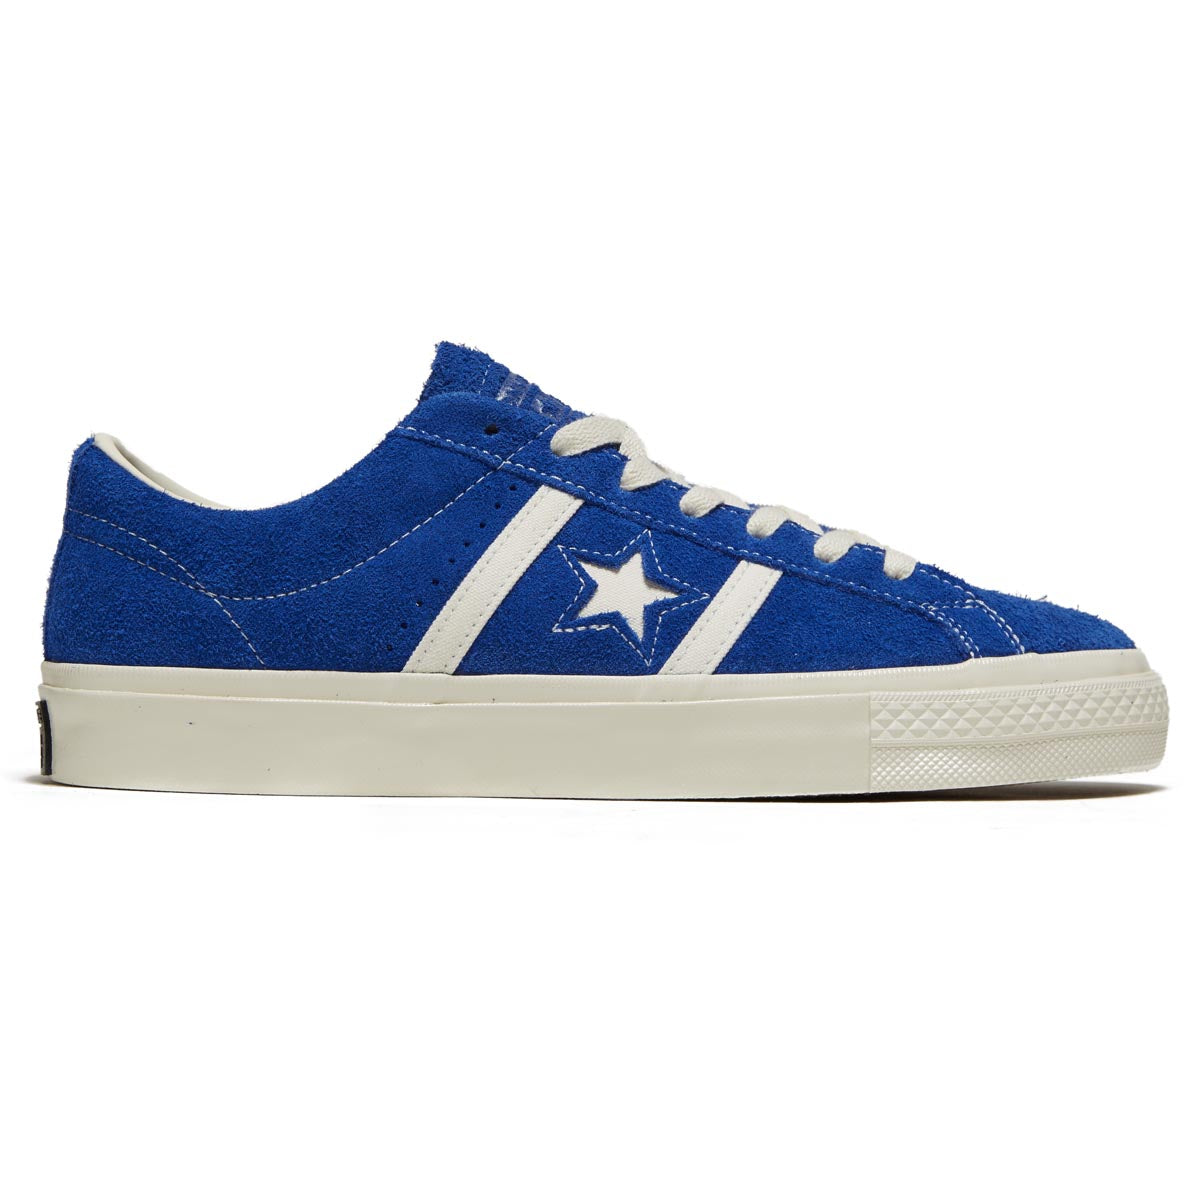 Converse One Star Academy Pro Shoes - Blue/Egret/Egret image 1